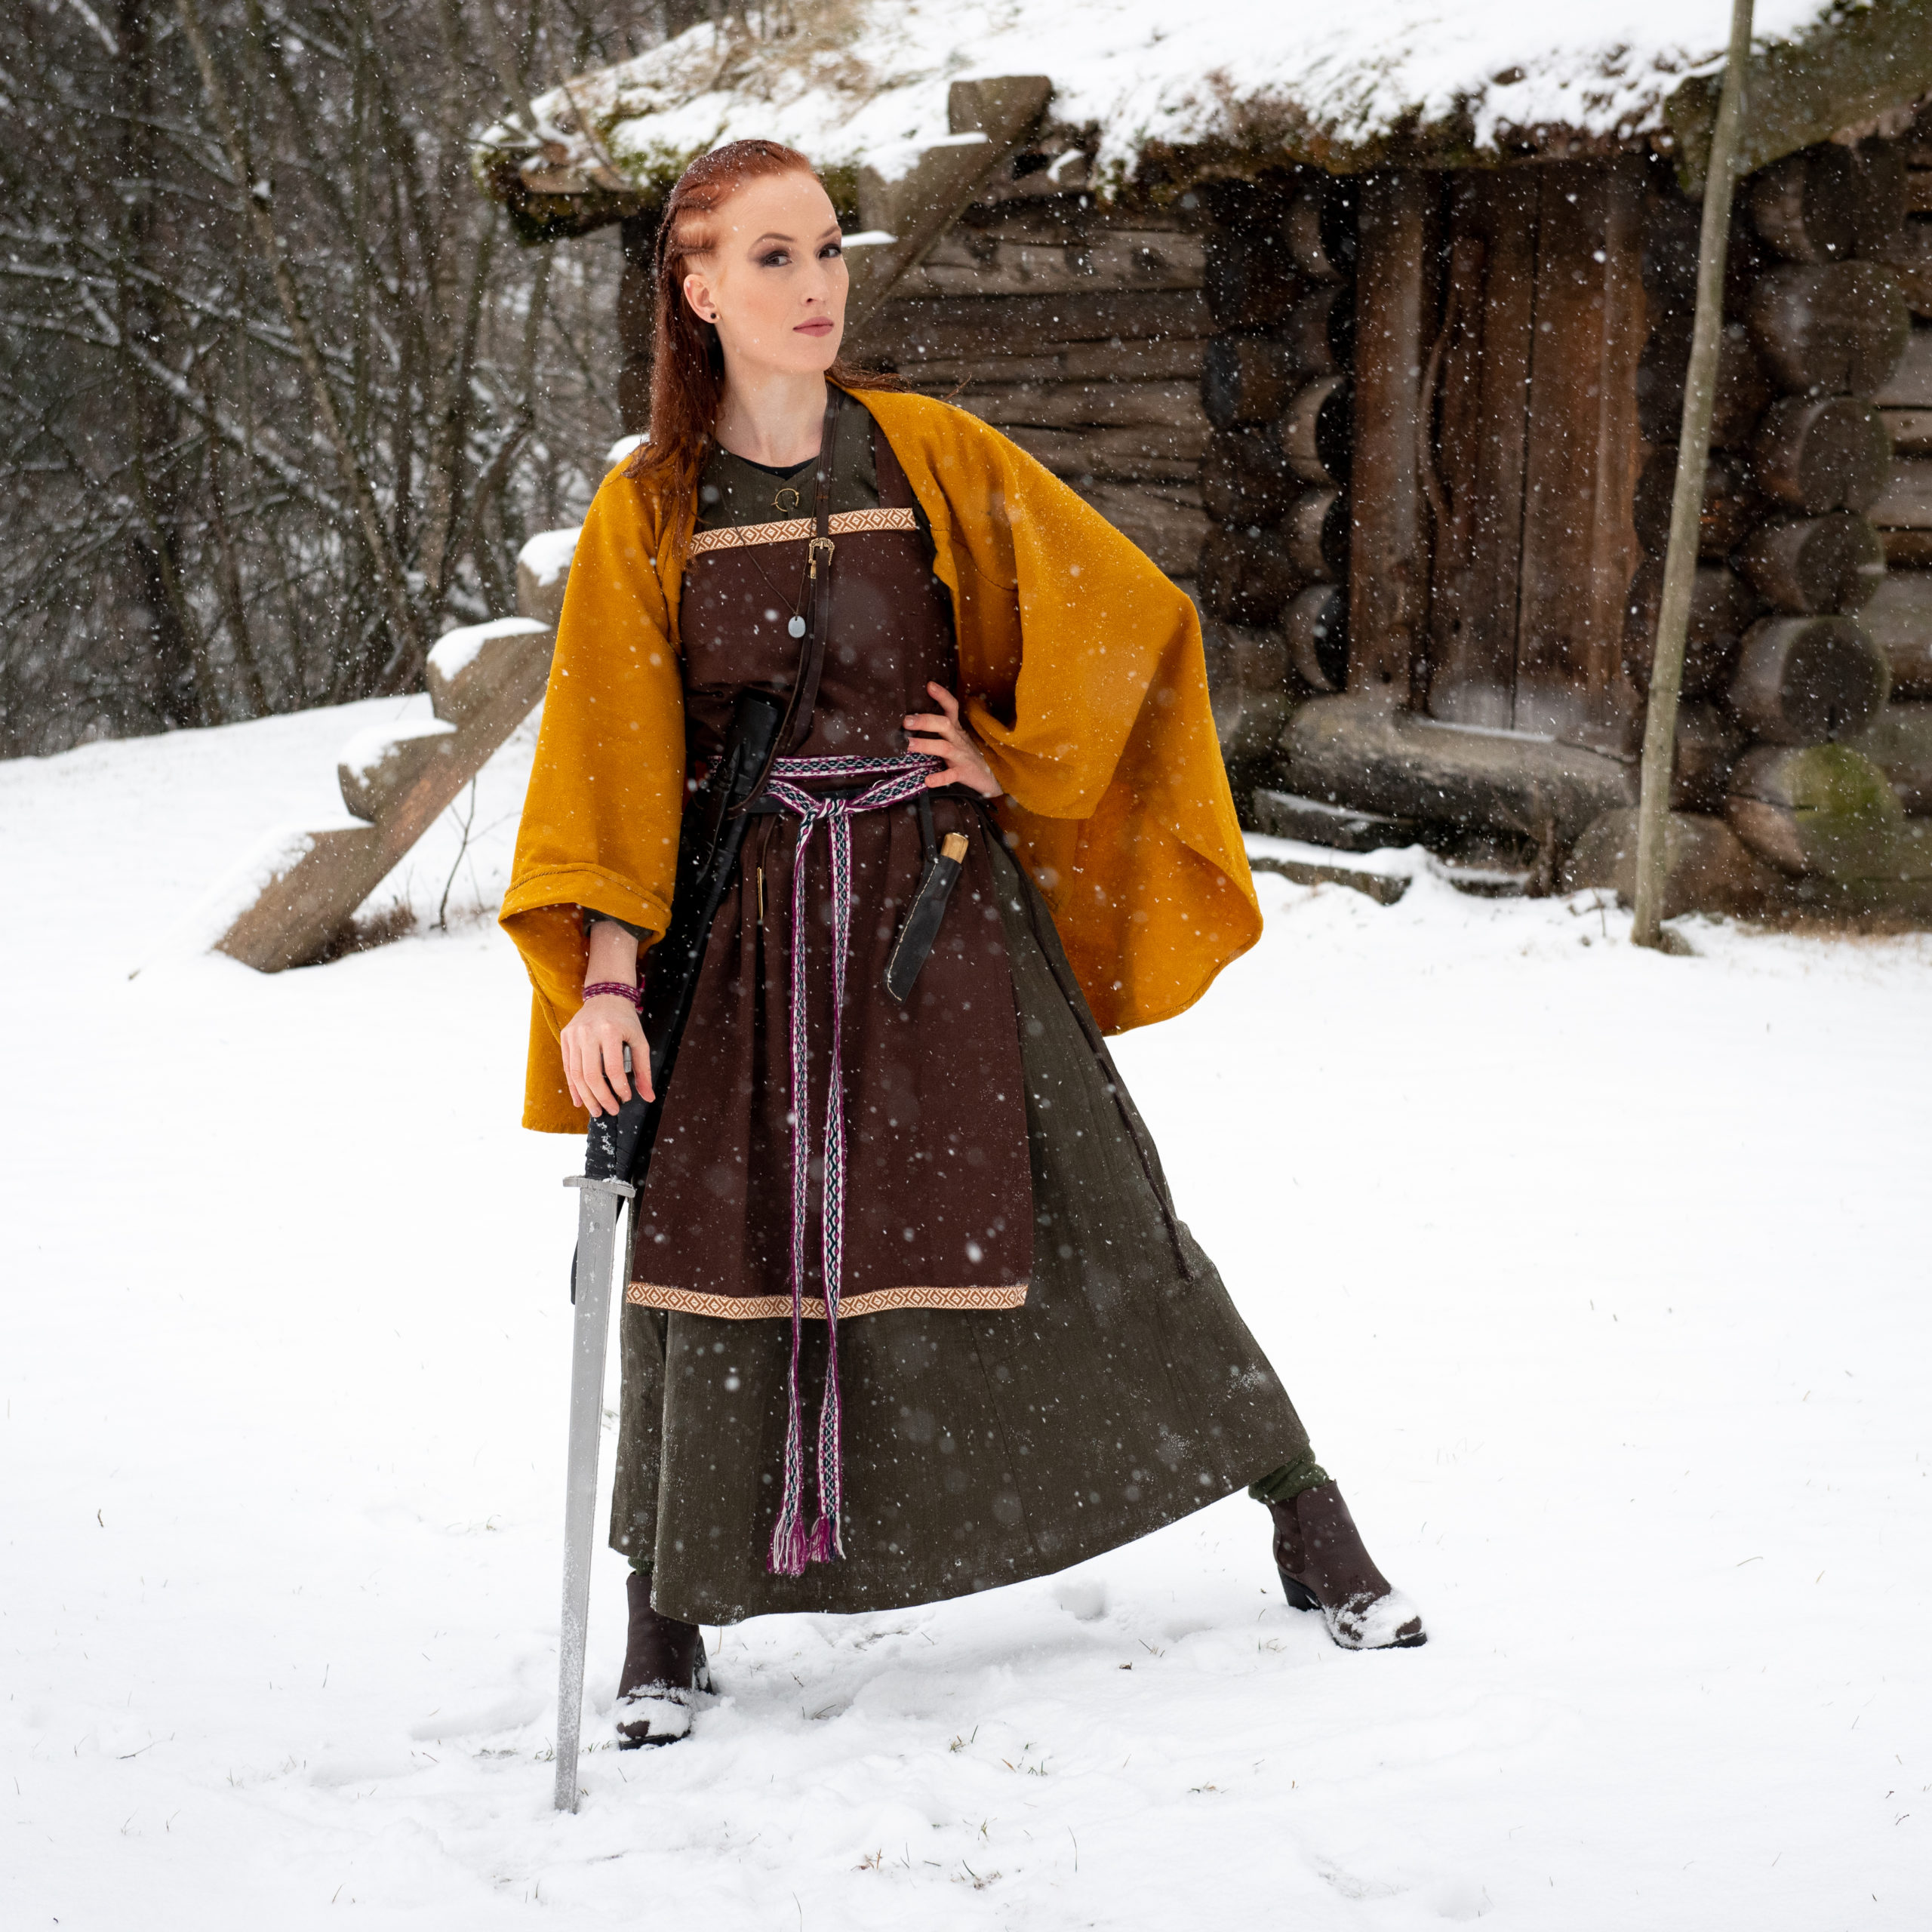 A Viking Focus – Connected to “Røtter” – Ann Kathrin Granhus